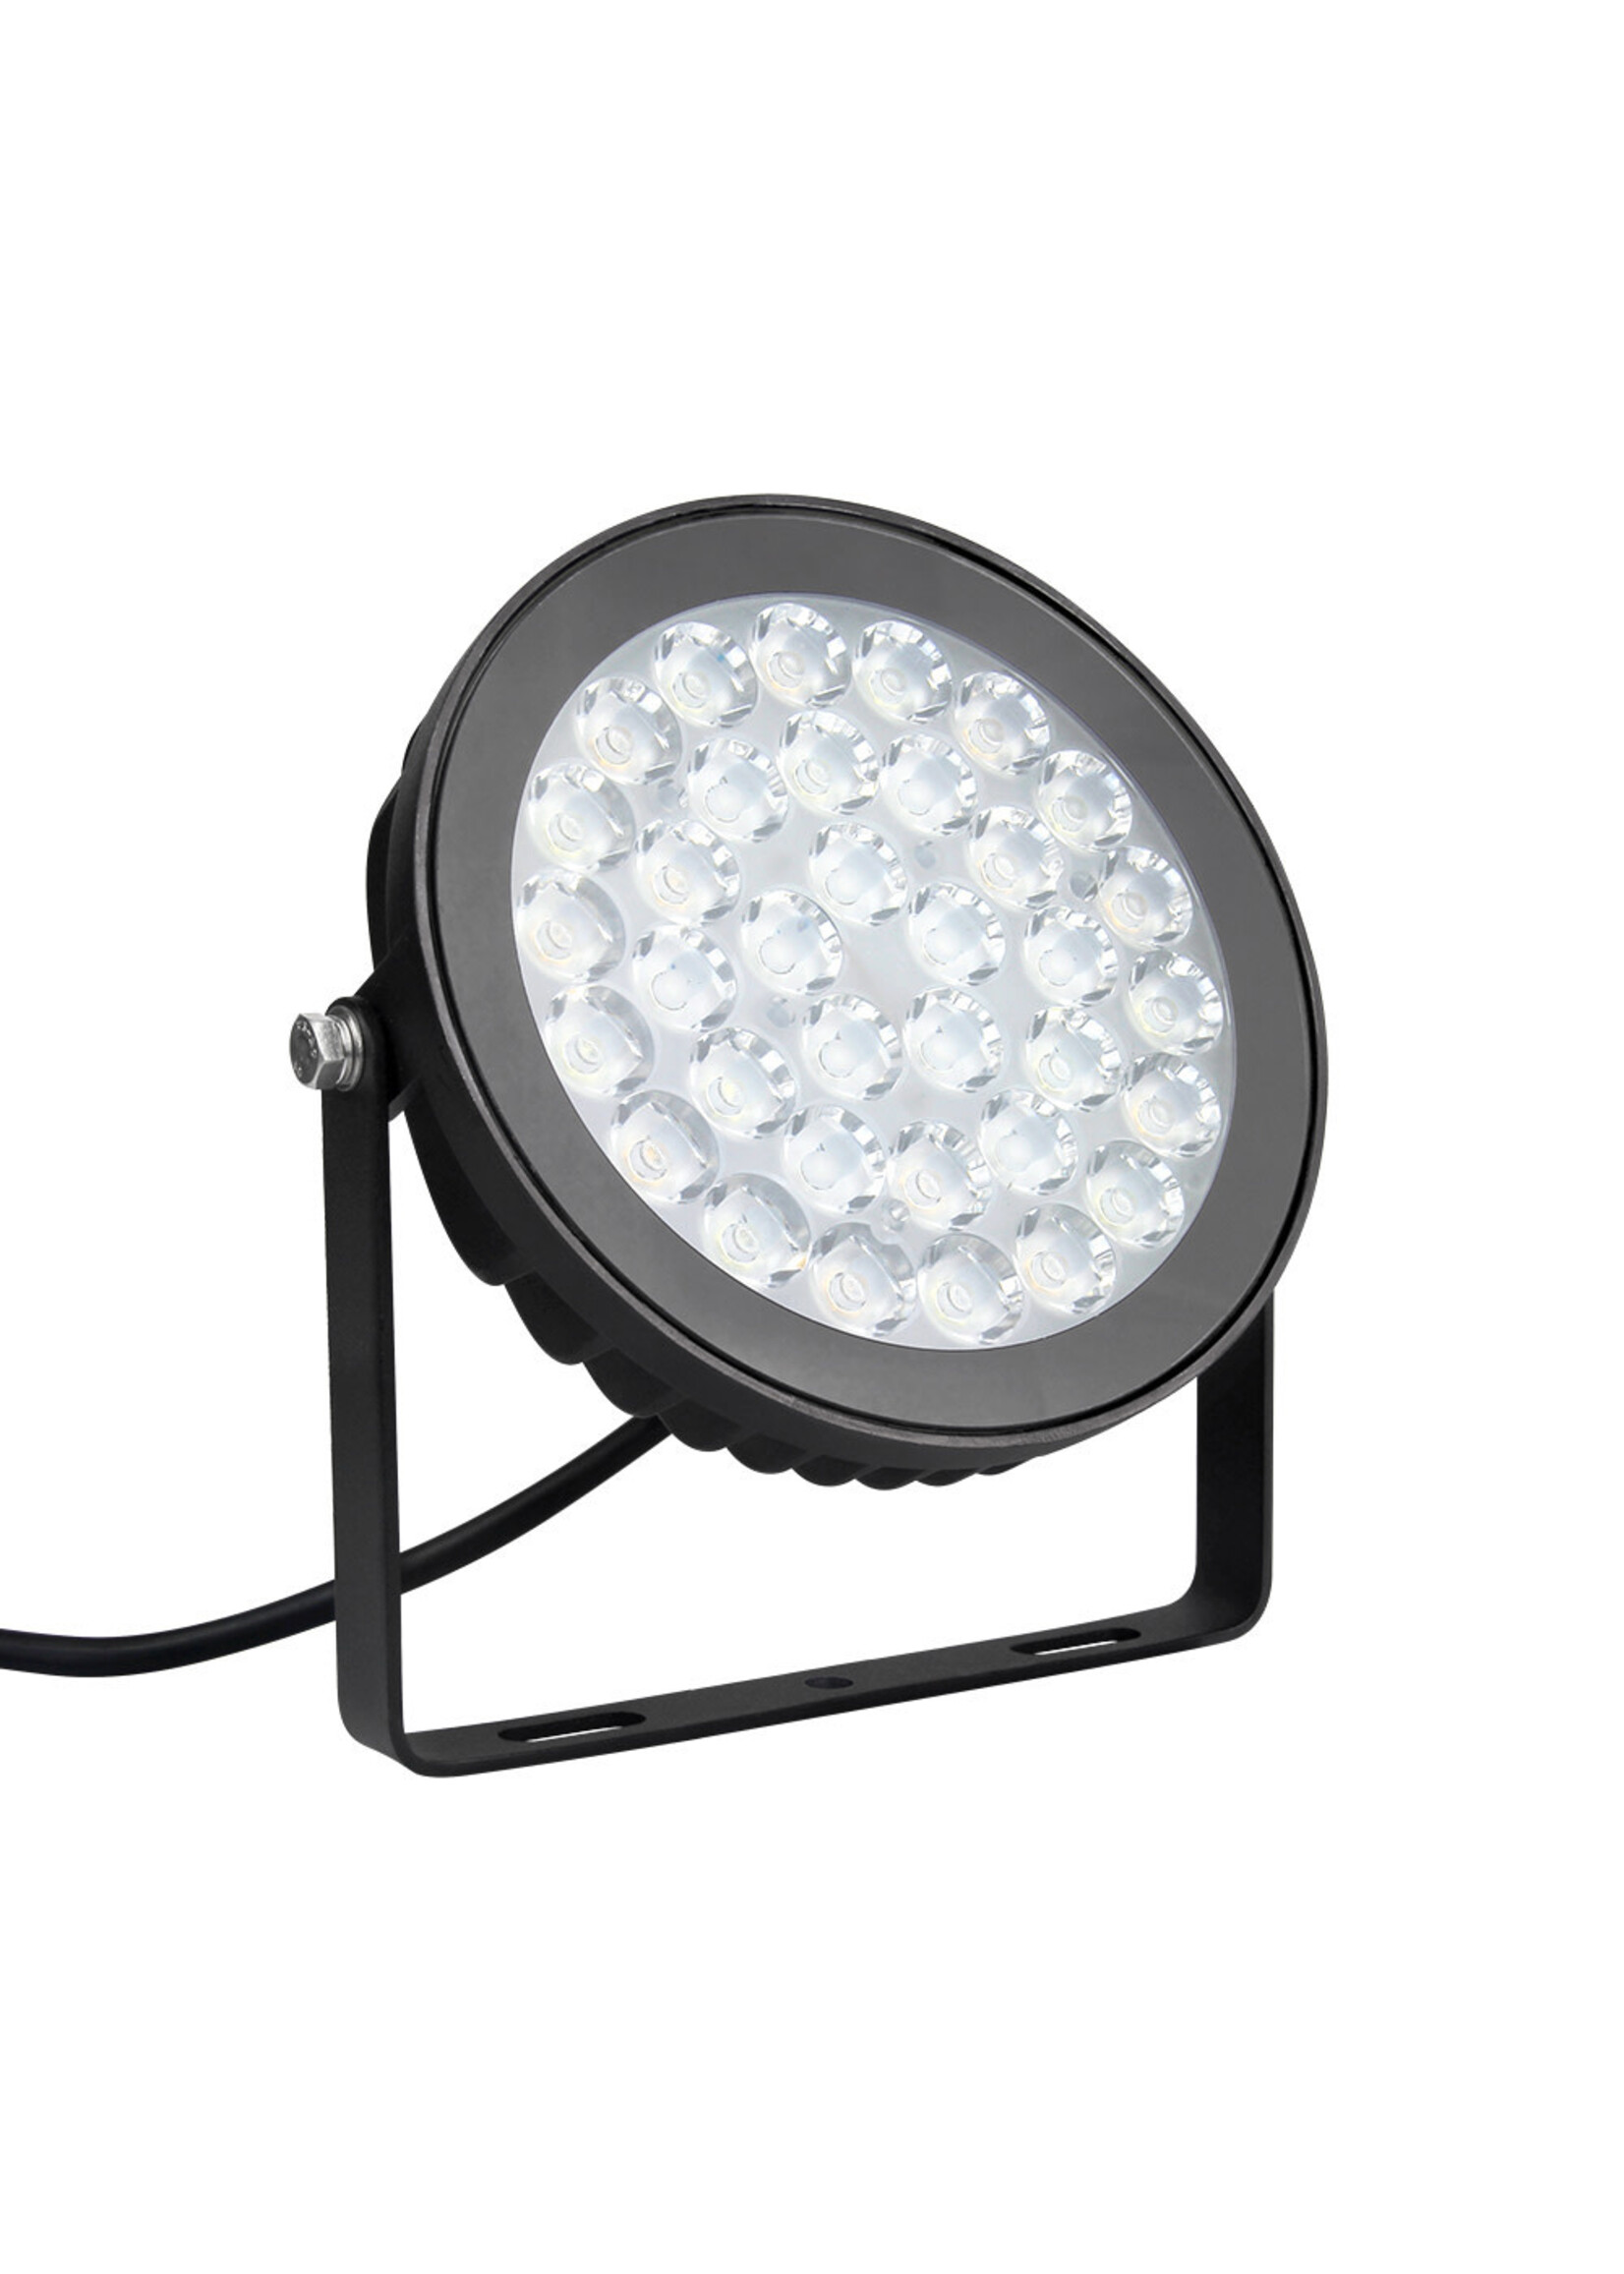 MI LIGHT FUTC05 25W RGB+CCT Smart LED Garden Light (2.4GHz) 120-240V